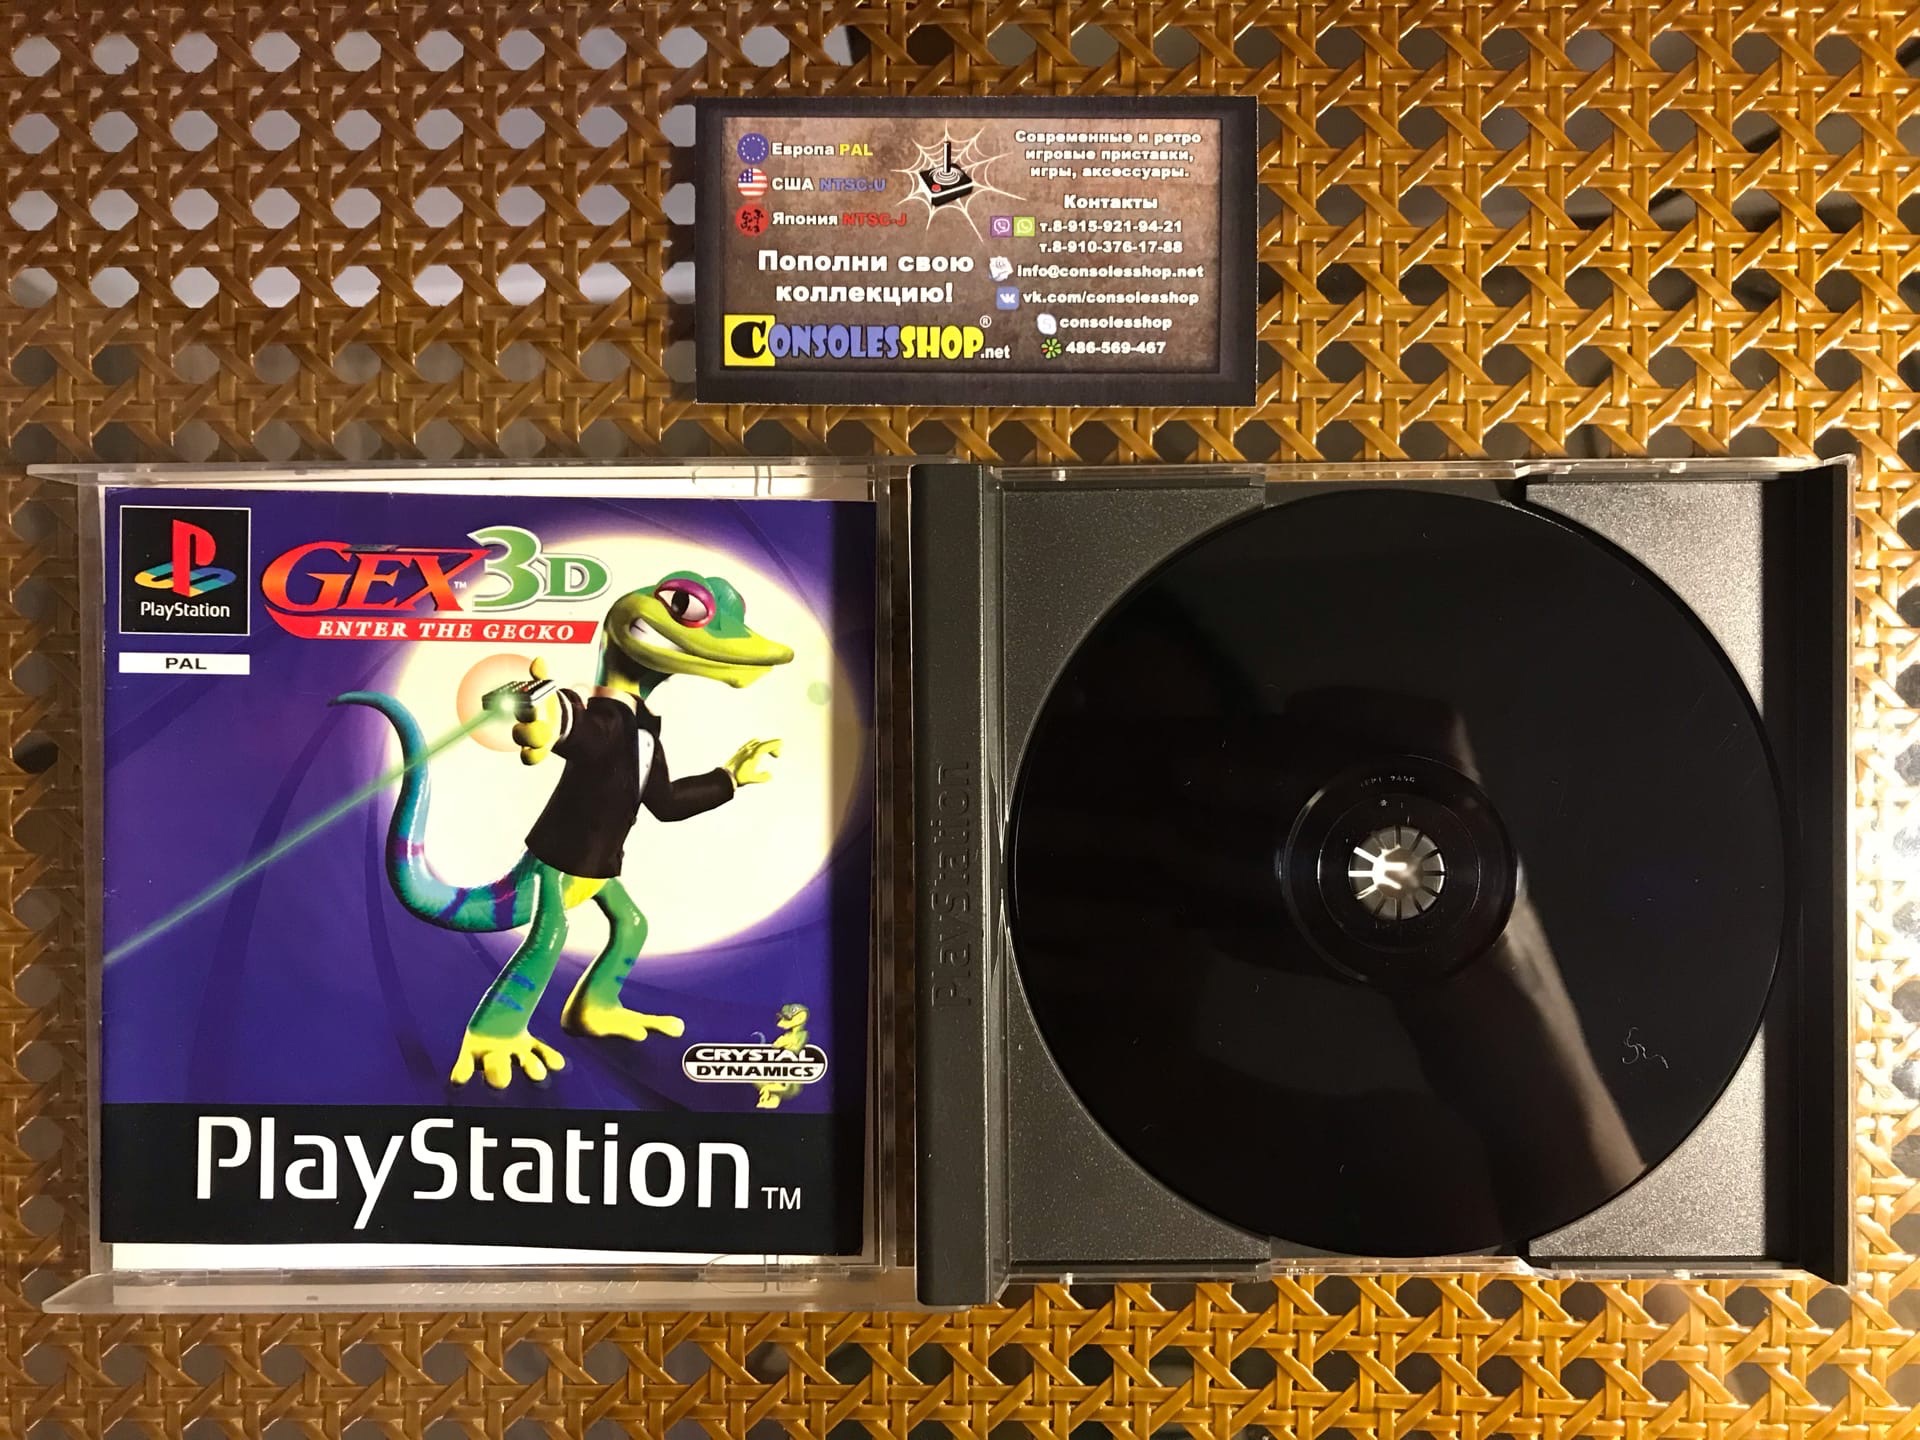 Enter the d. GEX enter the Gecko ps1. GEX 3d enter the Gecko. GEX enter the Gecko Gameplay ps1. Say GEX.